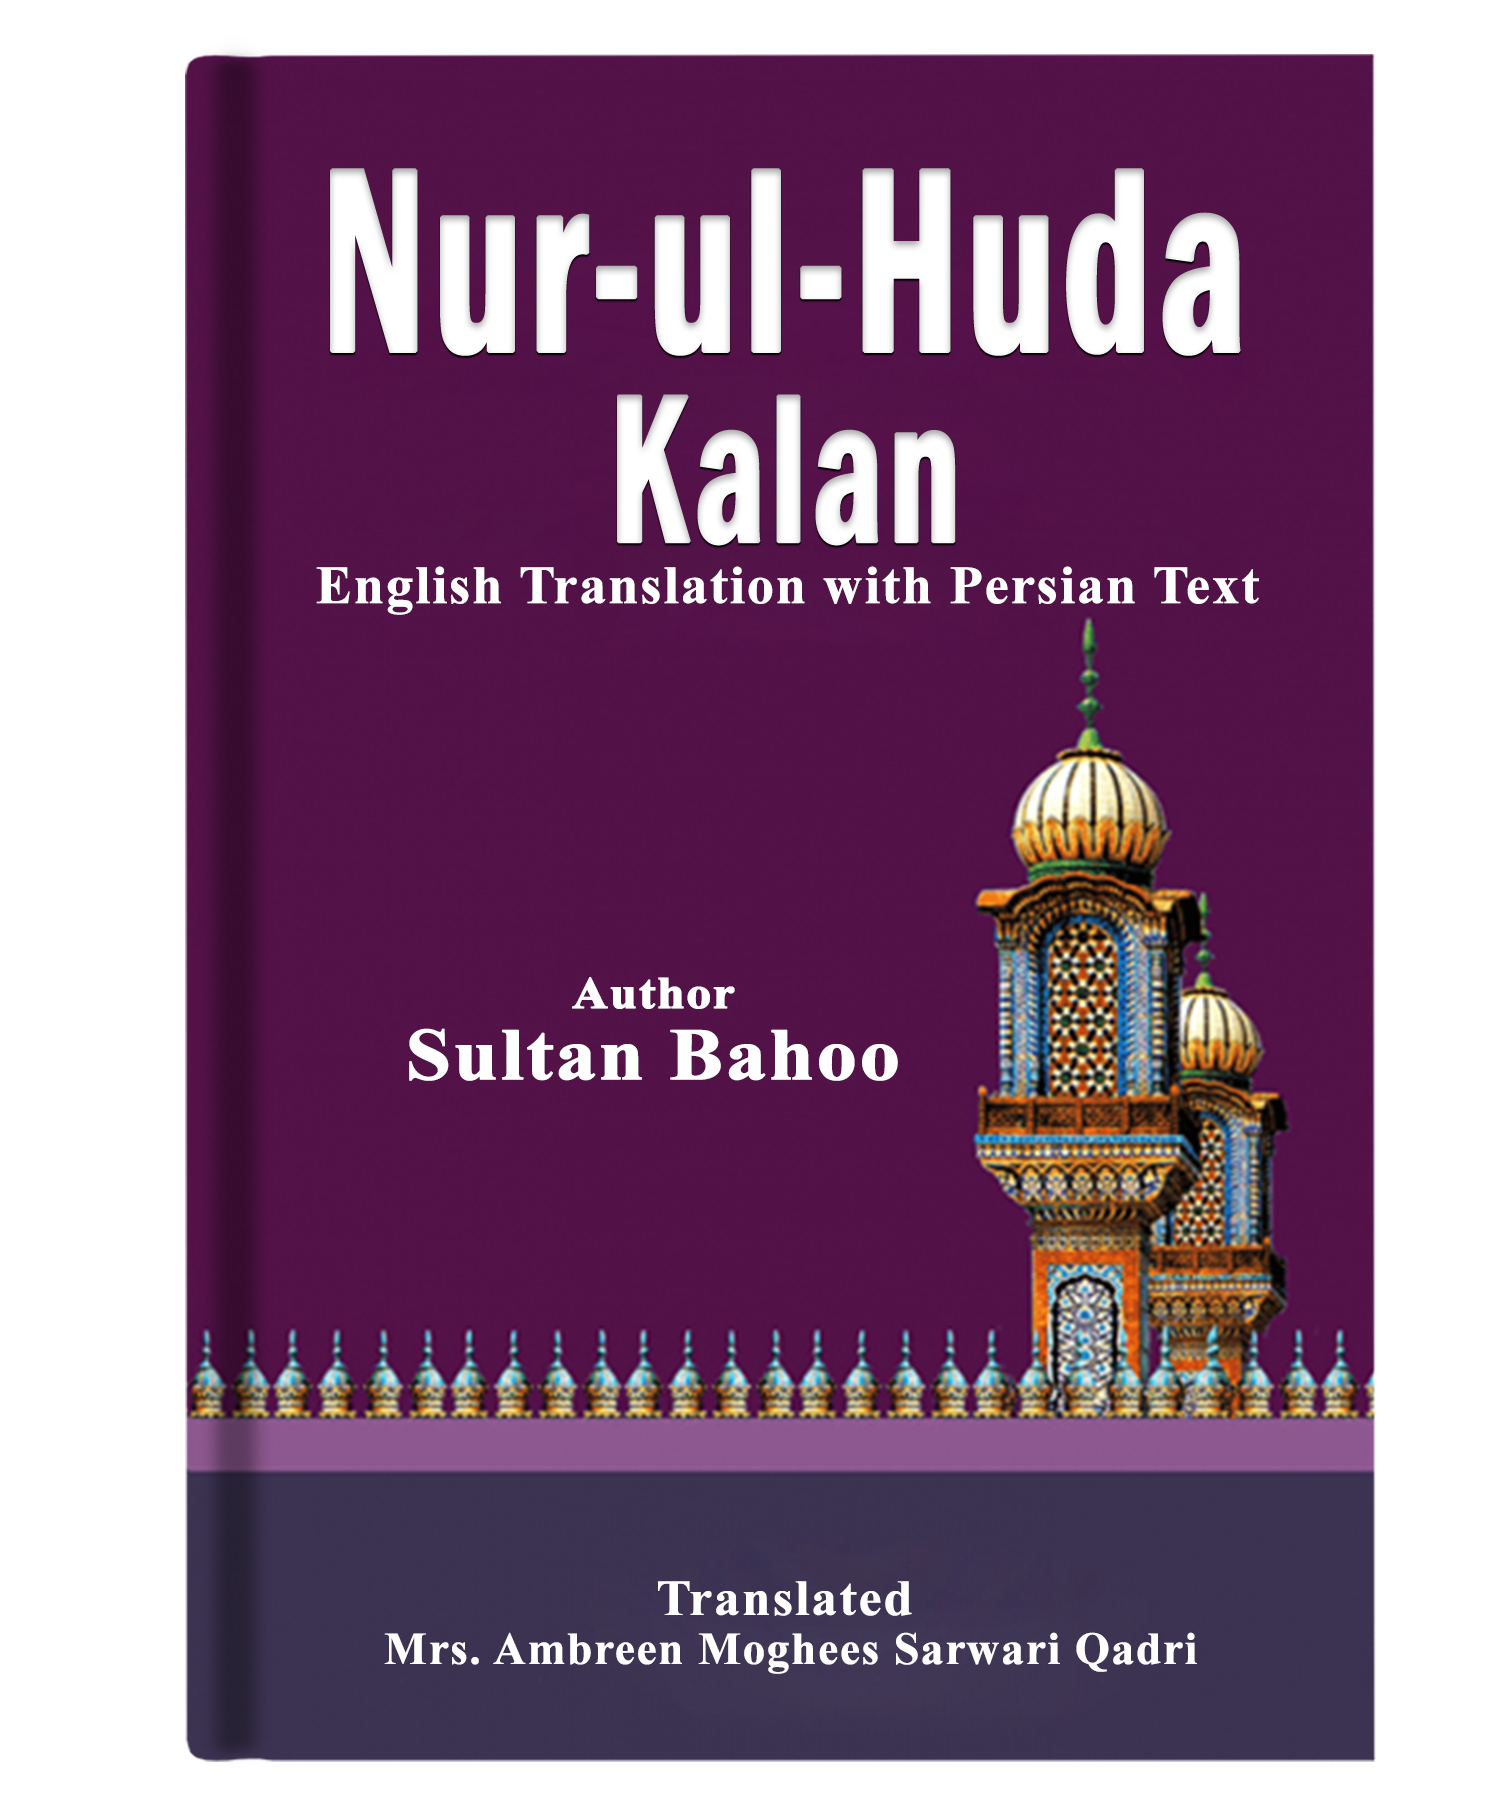 nur-ul-huda kalan english translation with persian text